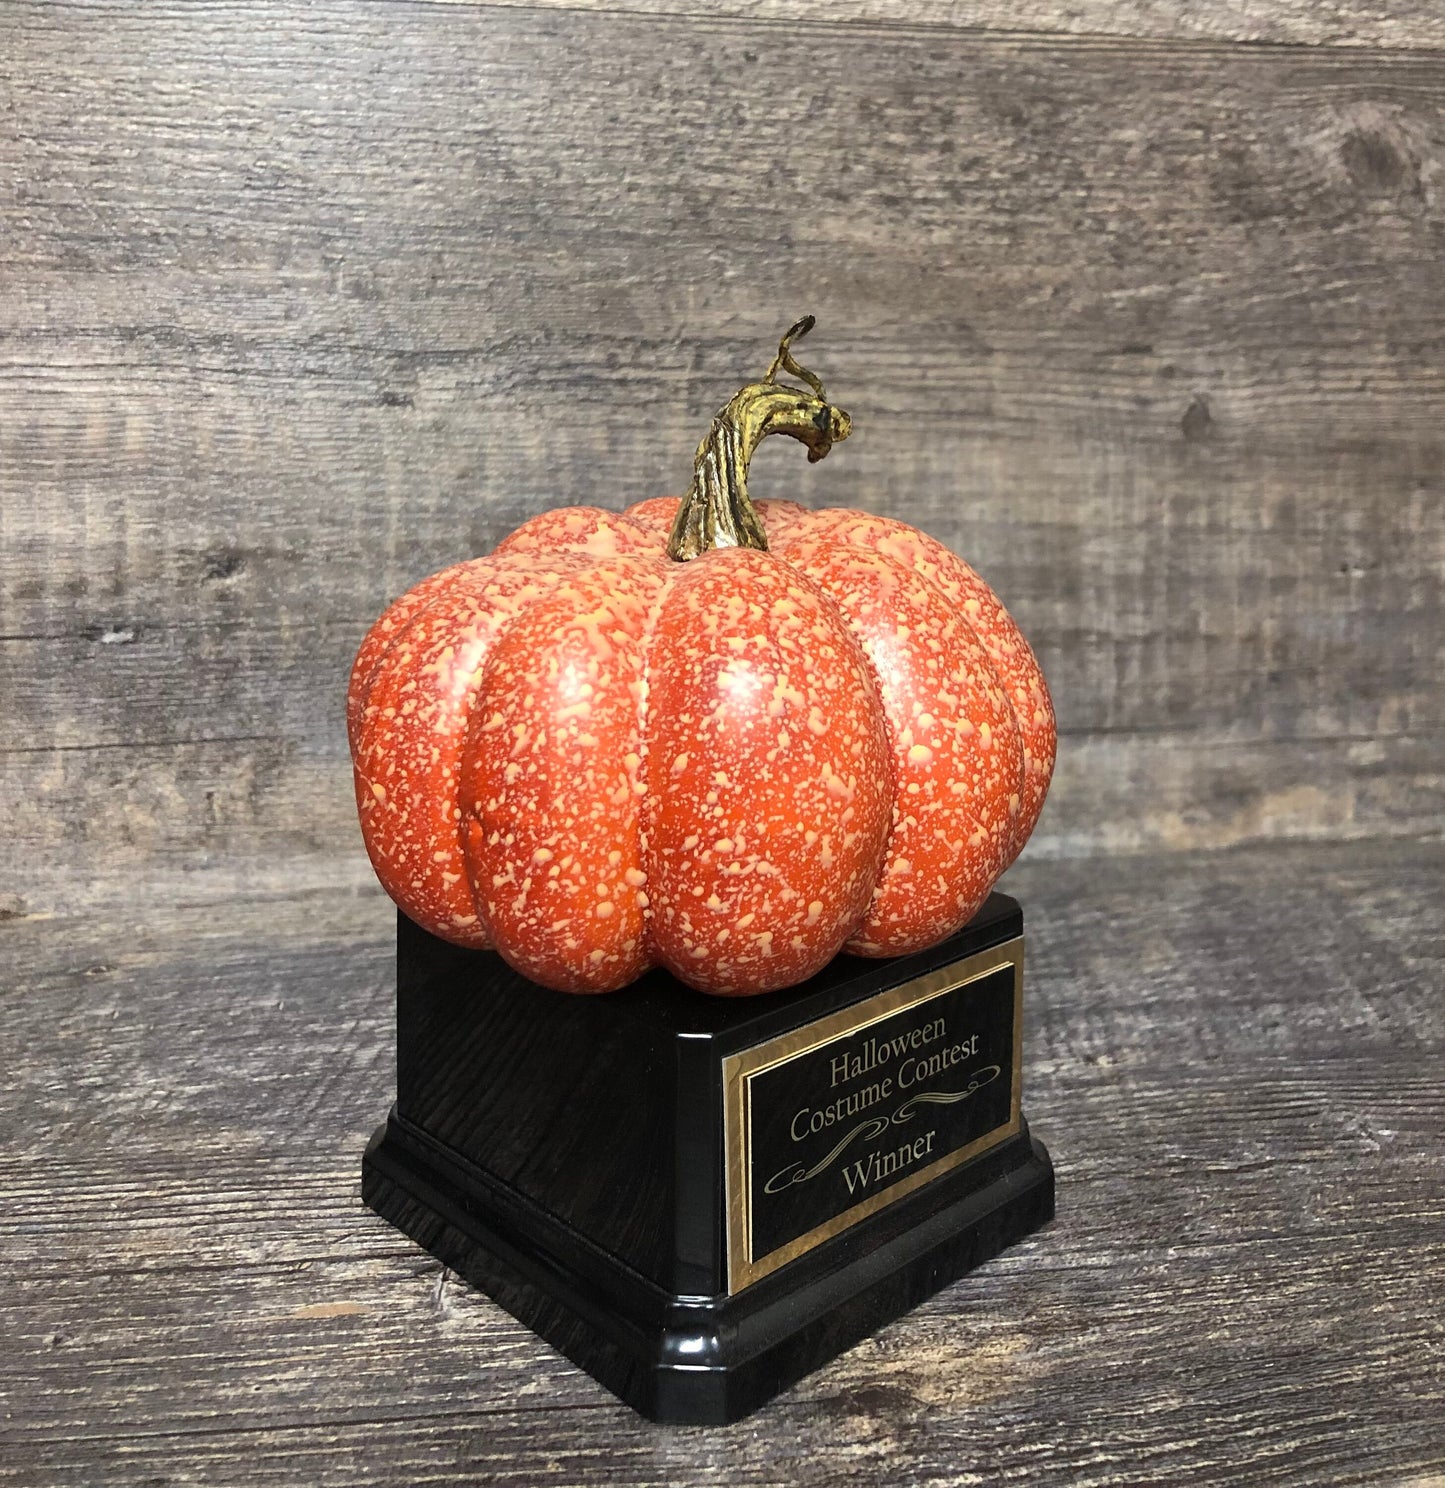 Halloween Trophy Pumpkin Carving Contest Jack O Lantern Trophy Best Costume Contest Prize Orange Speckled Pumpkin Halloween Decor